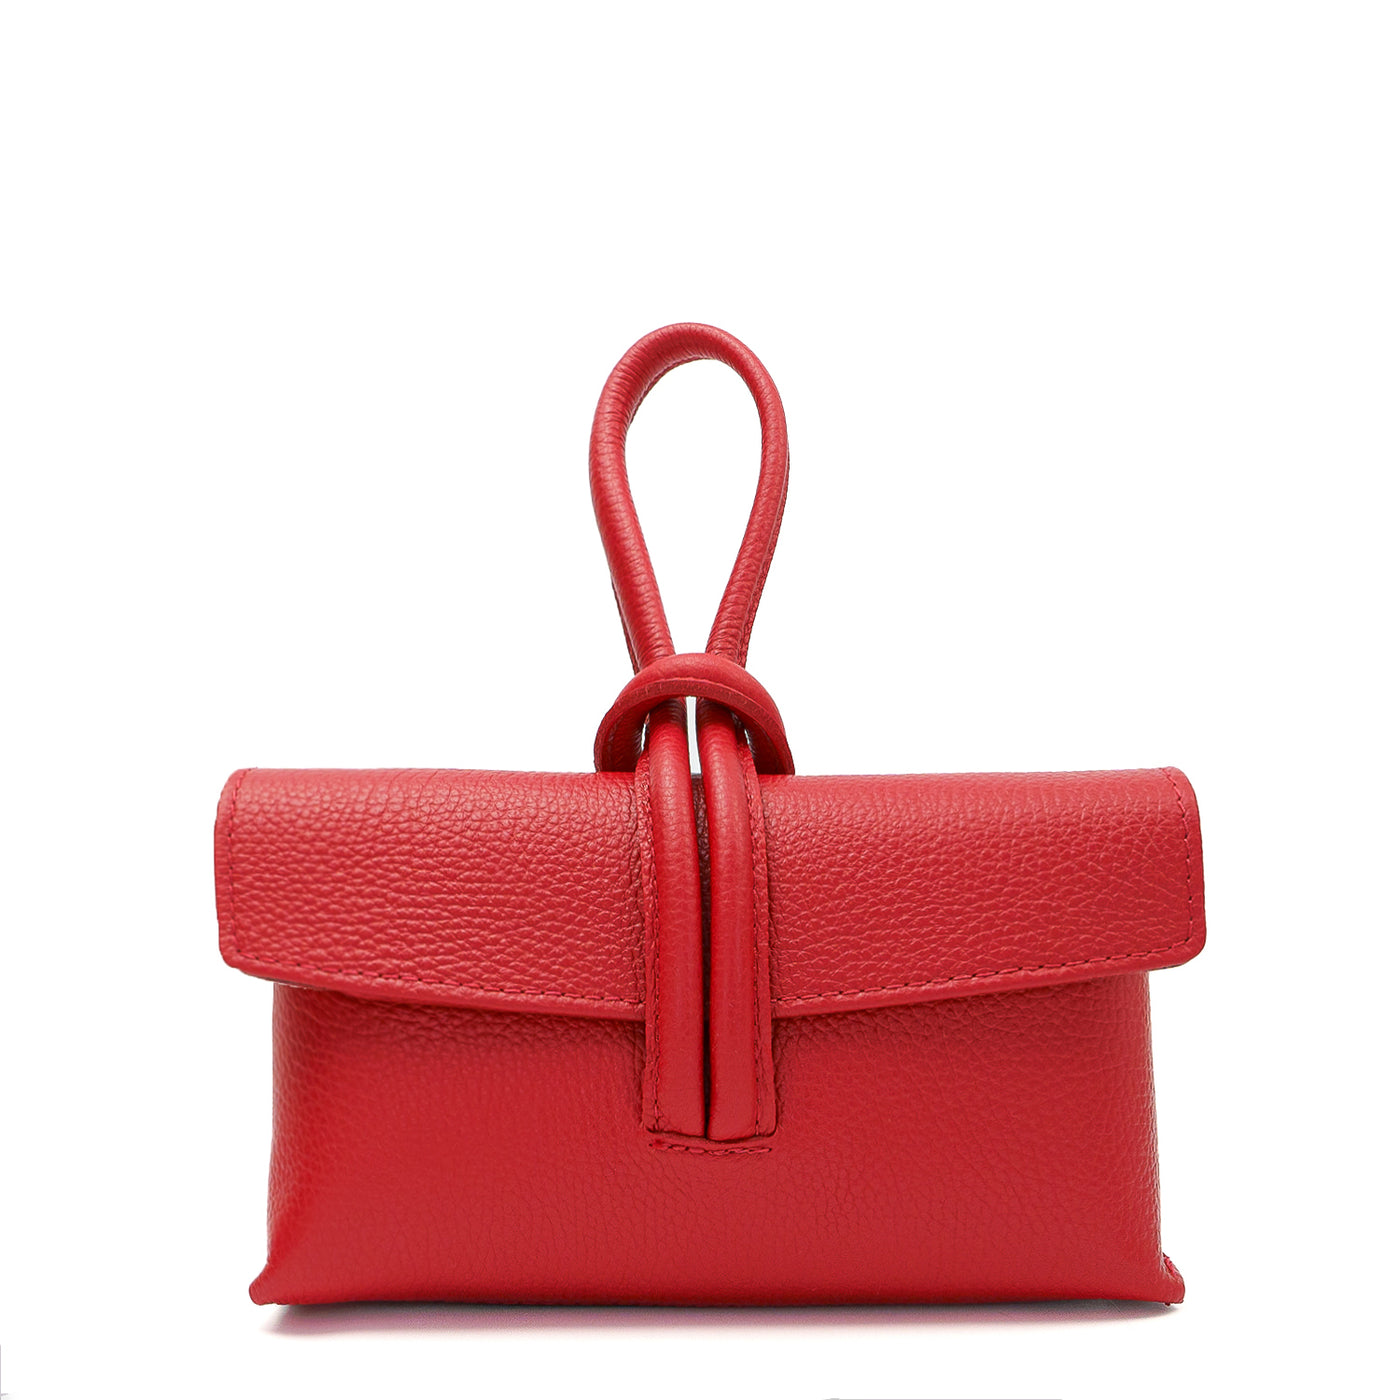 Leather bag "Barletta", Red